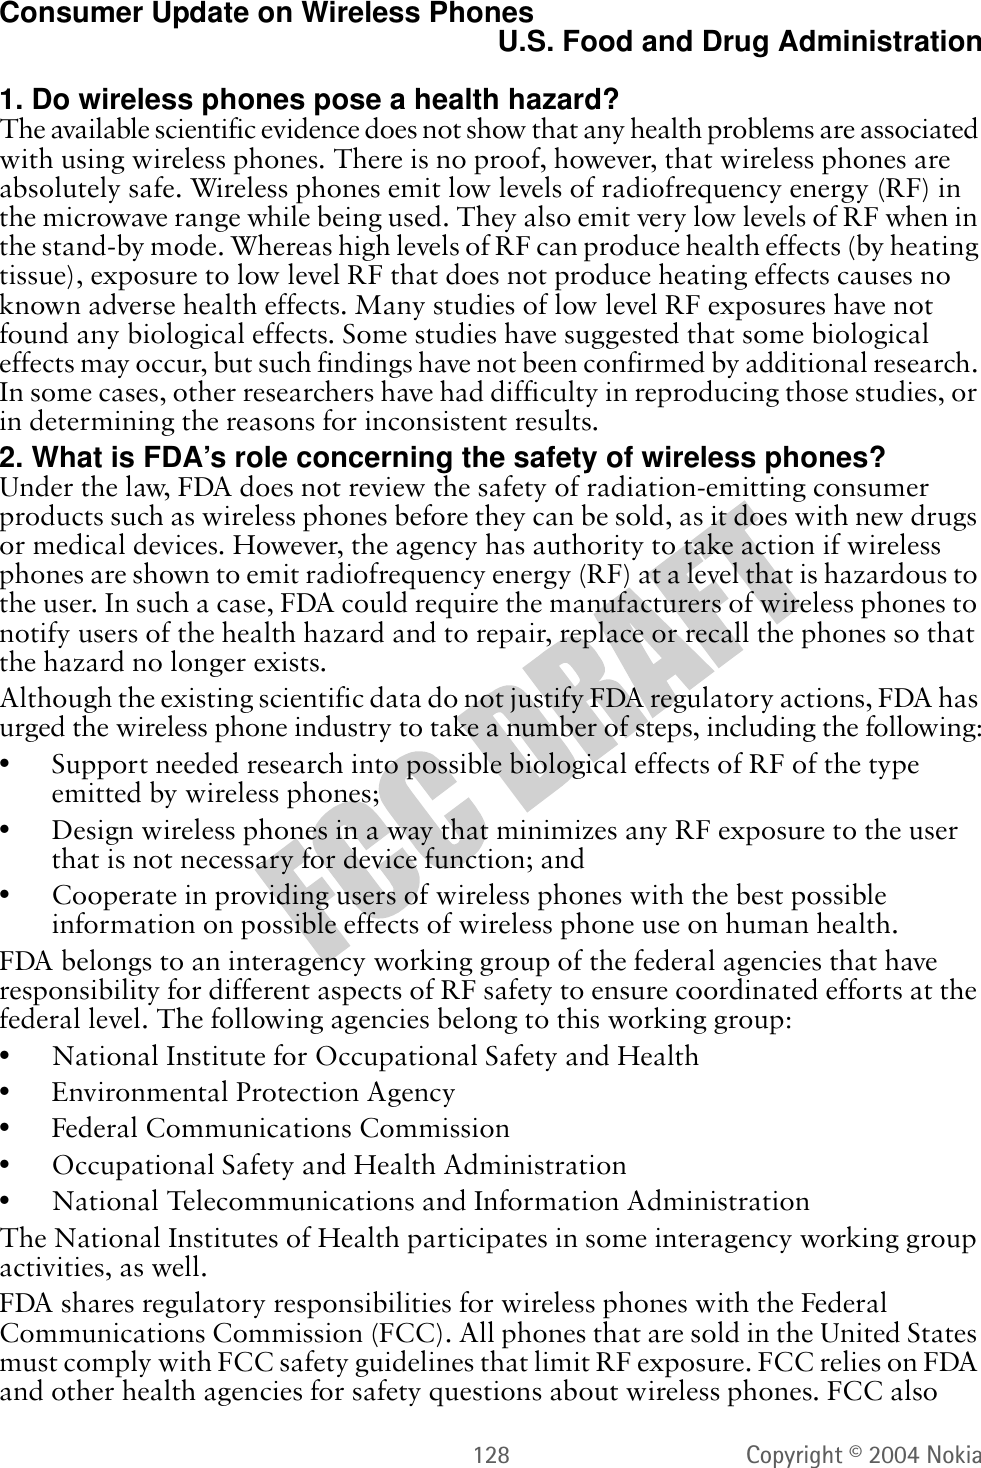 128 Copyright © 2004 NokiaConsumer Update on Wireless PhonesU.S. Food and Drug Administration1. Do wireless phones pose a health hazard?7KHDYDLODEOHVFLHQWLILFHYLGHQFHGRHVQRWVKRZWKDWDQ\KHDOWKSUREOHPVDUHDVVRFLDWHGZLWKXVLQJZLUHOHVVSKRQHV7KHUHLVQRSURRIKRZHYHUWKDWZLUHOHVVSKRQHVDUHDEVROXWHO\VDIH:LUHOHVVSKRQHVHPLWORZOHYHOVRIUDGLRIUHTXHQF\HQHUJ\5)LQWKHPLFURZDYHUDQJHZKLOHEHLQJXVHG7KH\DOVRHPLWYHU\ORZOHYHOVRI5)ZKHQLQWKHVWDQGE\PRGH:KHUHDVKLJKOHYHOVRI5)FDQSURGXFHKHDOWKHIIHFWVE\KHDWLQJWLVVXHH[SRVXUHWRORZOHYHO5)WKDWGRHVQRWSURGXFHKHDWLQJHIIHFWVFDXVHVQRNQRZQDGYHUVHKHDOWKHIIHFWV0DQ\VWXGLHVRIORZOHYHO5)H[SRVXUHVKDYHQRWIRXQGDQ\ELRORJLFDOHIIHFWV6RPHVWXGLHVKDYHVXJJHVWHGWKDWVRPHELRORJLFDOHIIHFWVPD\RFFXUEXWVXFKILQGLQJVKDYHQRWEHHQFRQILUPHGE\DGGLWLRQDOUHVHDUFK,QVRPHFDVHVRWKHUUHVHDUFKHUVKDYHKDGGLIILFXOW\LQUHSURGXFLQJWKRVHVWXGLHVRULQGHWHUPLQLQJWKHUHDVRQVIRULQFRQVLVWHQWUHVXOWV2. What is FDA’s role concerning the safety of wireless phones?8QGHUWKHODZ)&apos;$GRHVQRWUHYLHZWKHVDIHW\RIUDGLDWLRQHPLWWLQJFRQVXPHUSURGXFWVVXFKDVZLUHOHVVSKRQHVEHIRUHWKH\FDQEHVROGDVLWGRHVZLWKQHZGUXJVRUPHGLFDOGHYLFHV+RZHYHUWKHDJHQF\KDVDXWKRULW\WRWDNHDFWLRQLIZLUHOHVVSKRQHVDUHVKRZQWRHPLWUDGLRIUHTXHQF\HQHUJ\5)DWDOHYHOWKDWLVKD]DUGRXVWRWKHXVHU,QVXFKDFDVH)&apos;$FRXOGUHTXLUHWKHPDQXIDFWXUHUVRIZLUHOHVVSKRQHVWRQRWLI\XVHUVRIWKHKHDOWKKD]DUGDQGWRUHSDLUUHSODFHRUUHFDOOWKHSKRQHVVRWKDWWKHKD]DUGQRORQJHUH[LVWV$OWKRXJKWKHH[LVWLQJVFLHQWLILFGDWDGRQRWMXVWLI\)&apos;$UHJXODWRU\DFWLRQV)&apos;$KDVXUJHGWKHZLUHOHVVSKRQHLQGXVWU\WRWDNHDQXPEHURIVWHSVLQFOXGLQJWKHIROORZLQJ•6XSSRUWQHHGHGUHVHDUFKLQWRSRVVLEOHELRORJLFDOHIIHFWVRI5)RIWKHW\SHHPLWWHGE\ZLUHOHVVSKRQHV•&apos;HVLJQZLUHOHVVSKRQHVLQDZD\WKDWPLQLPL]HVDQ\5)H[SRVXUHWRWKHXVHUWKDWLVQRWQHFHVVDU\IRUGHYLFHIXQFWLRQDQG•&amp;RRSHUDWHLQSURYLGLQJXVHUVRIZLUHOHVVSKRQHVZLWKWKHEHVWSRVVLEOHLQIRUPDWLRQRQSRVVLEOHHIIHFWVRIZLUHOHVVSKRQHXVHRQKXPDQKHDOWK)&apos;$EHORQJVWRDQLQWHUDJHQF\ZRUNLQJJURXSRIWKHIHGHUDODJHQFLHVWKDWKDYHUHVSRQVLELOLW\IRUGLIIHUHQWDVSHFWVRI5)VDIHW\WRHQVXUHFRRUGLQDWHGHIIRUWVDWWKHIHGHUDOOHYHO7KHIROORZLQJDJHQFLHVEHORQJWRWKLVZRUNLQJJURXS•1DWLRQDO,QVWLWXWHIRU2FFXSDWLRQDO6DIHW\DQG+HDOWK•(QYLURQPHQWDO3URWHFWLRQ$JHQF\•)HGHUDO&amp;RPPXQLFDWLRQV&amp;RPPLVVLRQ•2FFXSDWLRQDO6DIHW\DQG+HDOWK$GPLQLVWUDWLRQ•1DWLRQDO7HOHFRPPXQLFDWLRQVDQG,QIRUPDWLRQ$GPLQLVWUDWLRQ7KH1DWLRQDO,QVWLWXWHVRI+HDOWKSDUWLFLSDWHVLQVRPHLQWHUDJHQF\ZRUNLQJJURXSDFWLYLWLHVDVZHOO)&apos;$VKDUHVUHJXODWRU\UHVSRQVLELOLWLHVIRUZLUHOHVVSKRQHVZLWKWKH)HGHUDO&amp;RPPXQLFDWLRQV&amp;RPPLVVLRQ)&amp;&amp;$OOSKRQHVWKDWDUHVROGLQWKH8QLWHG6WDWHVPXVWFRPSO\ZLWK)&amp;&amp;VDIHW\JXLGHOLQHVWKDWOLPLW5)H[SRVXUH)&amp;&amp;UHOLHVRQ)&apos;$DQGRWKHUKHDOWKDJHQFLHVIRUVDIHW\TXHVWLRQVDERXWZLUHOHVVSKRQHV)&amp;&amp;DOVR